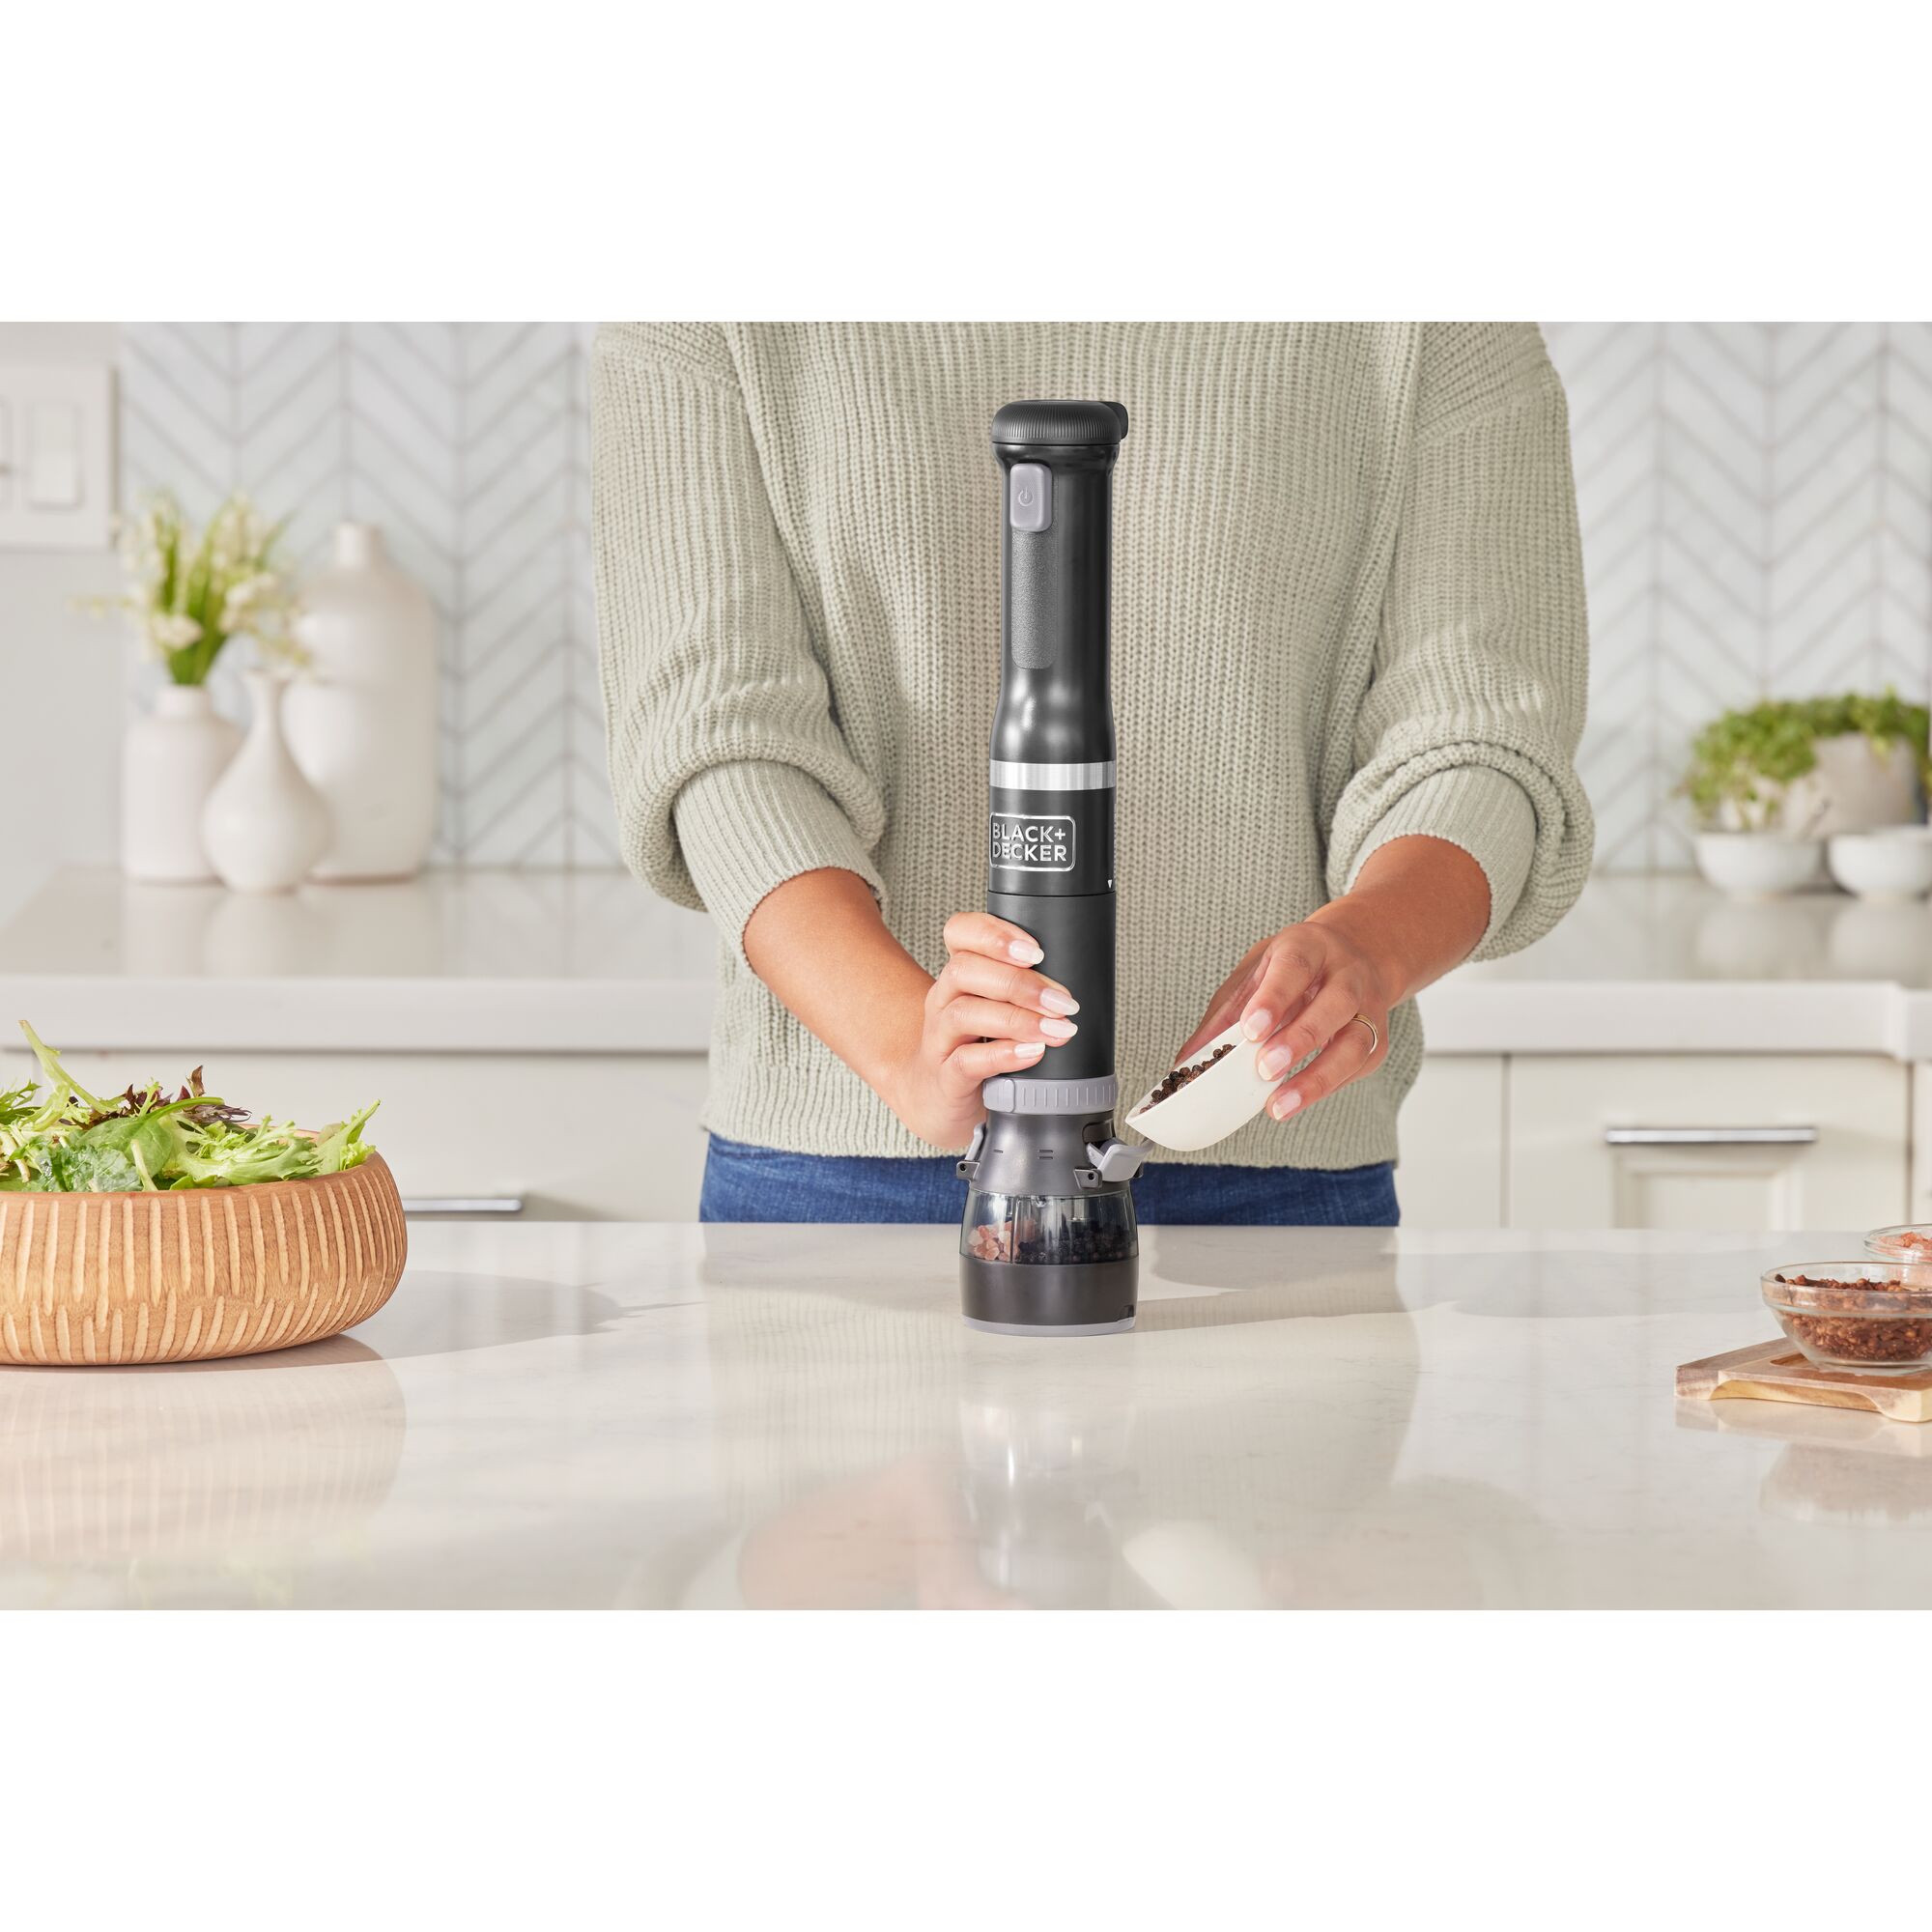 Talent adding peppercorns to the black, BLACK+DECKER kitchen wand spice grinder attachment